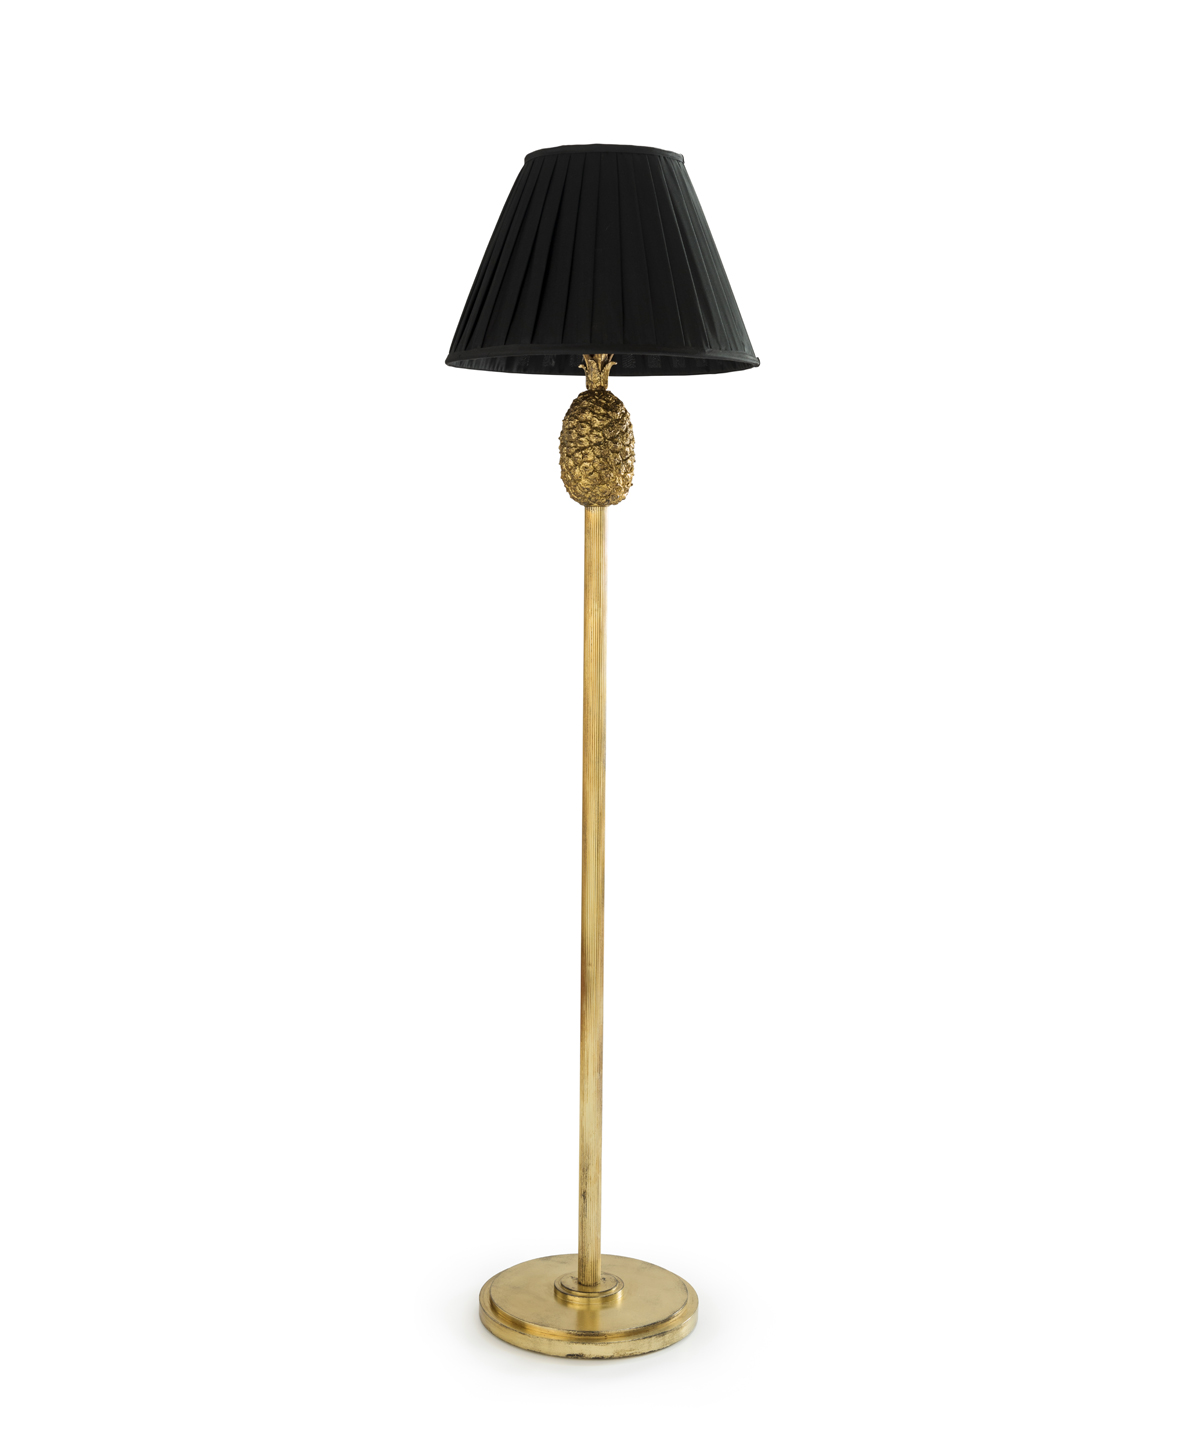 The Verandah Collection – The Pineapple Floor Lamp